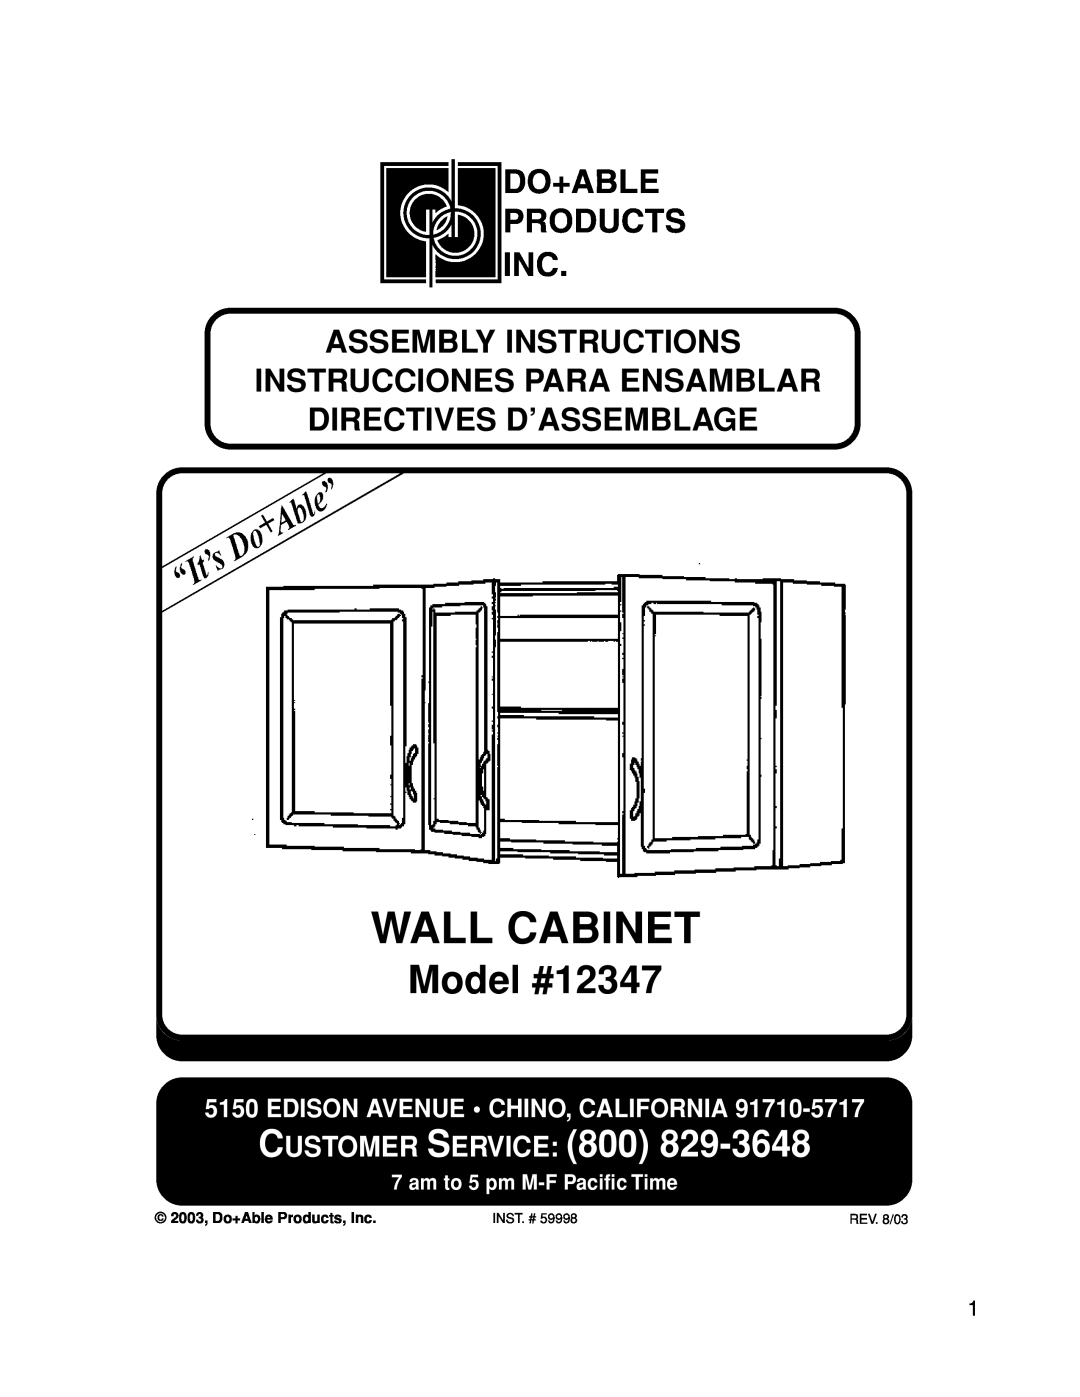 Closet Maid manual Wall Cabinet, Model #12347, Customer Service, Assembly Instructions, Edison Avenue Chino, California 